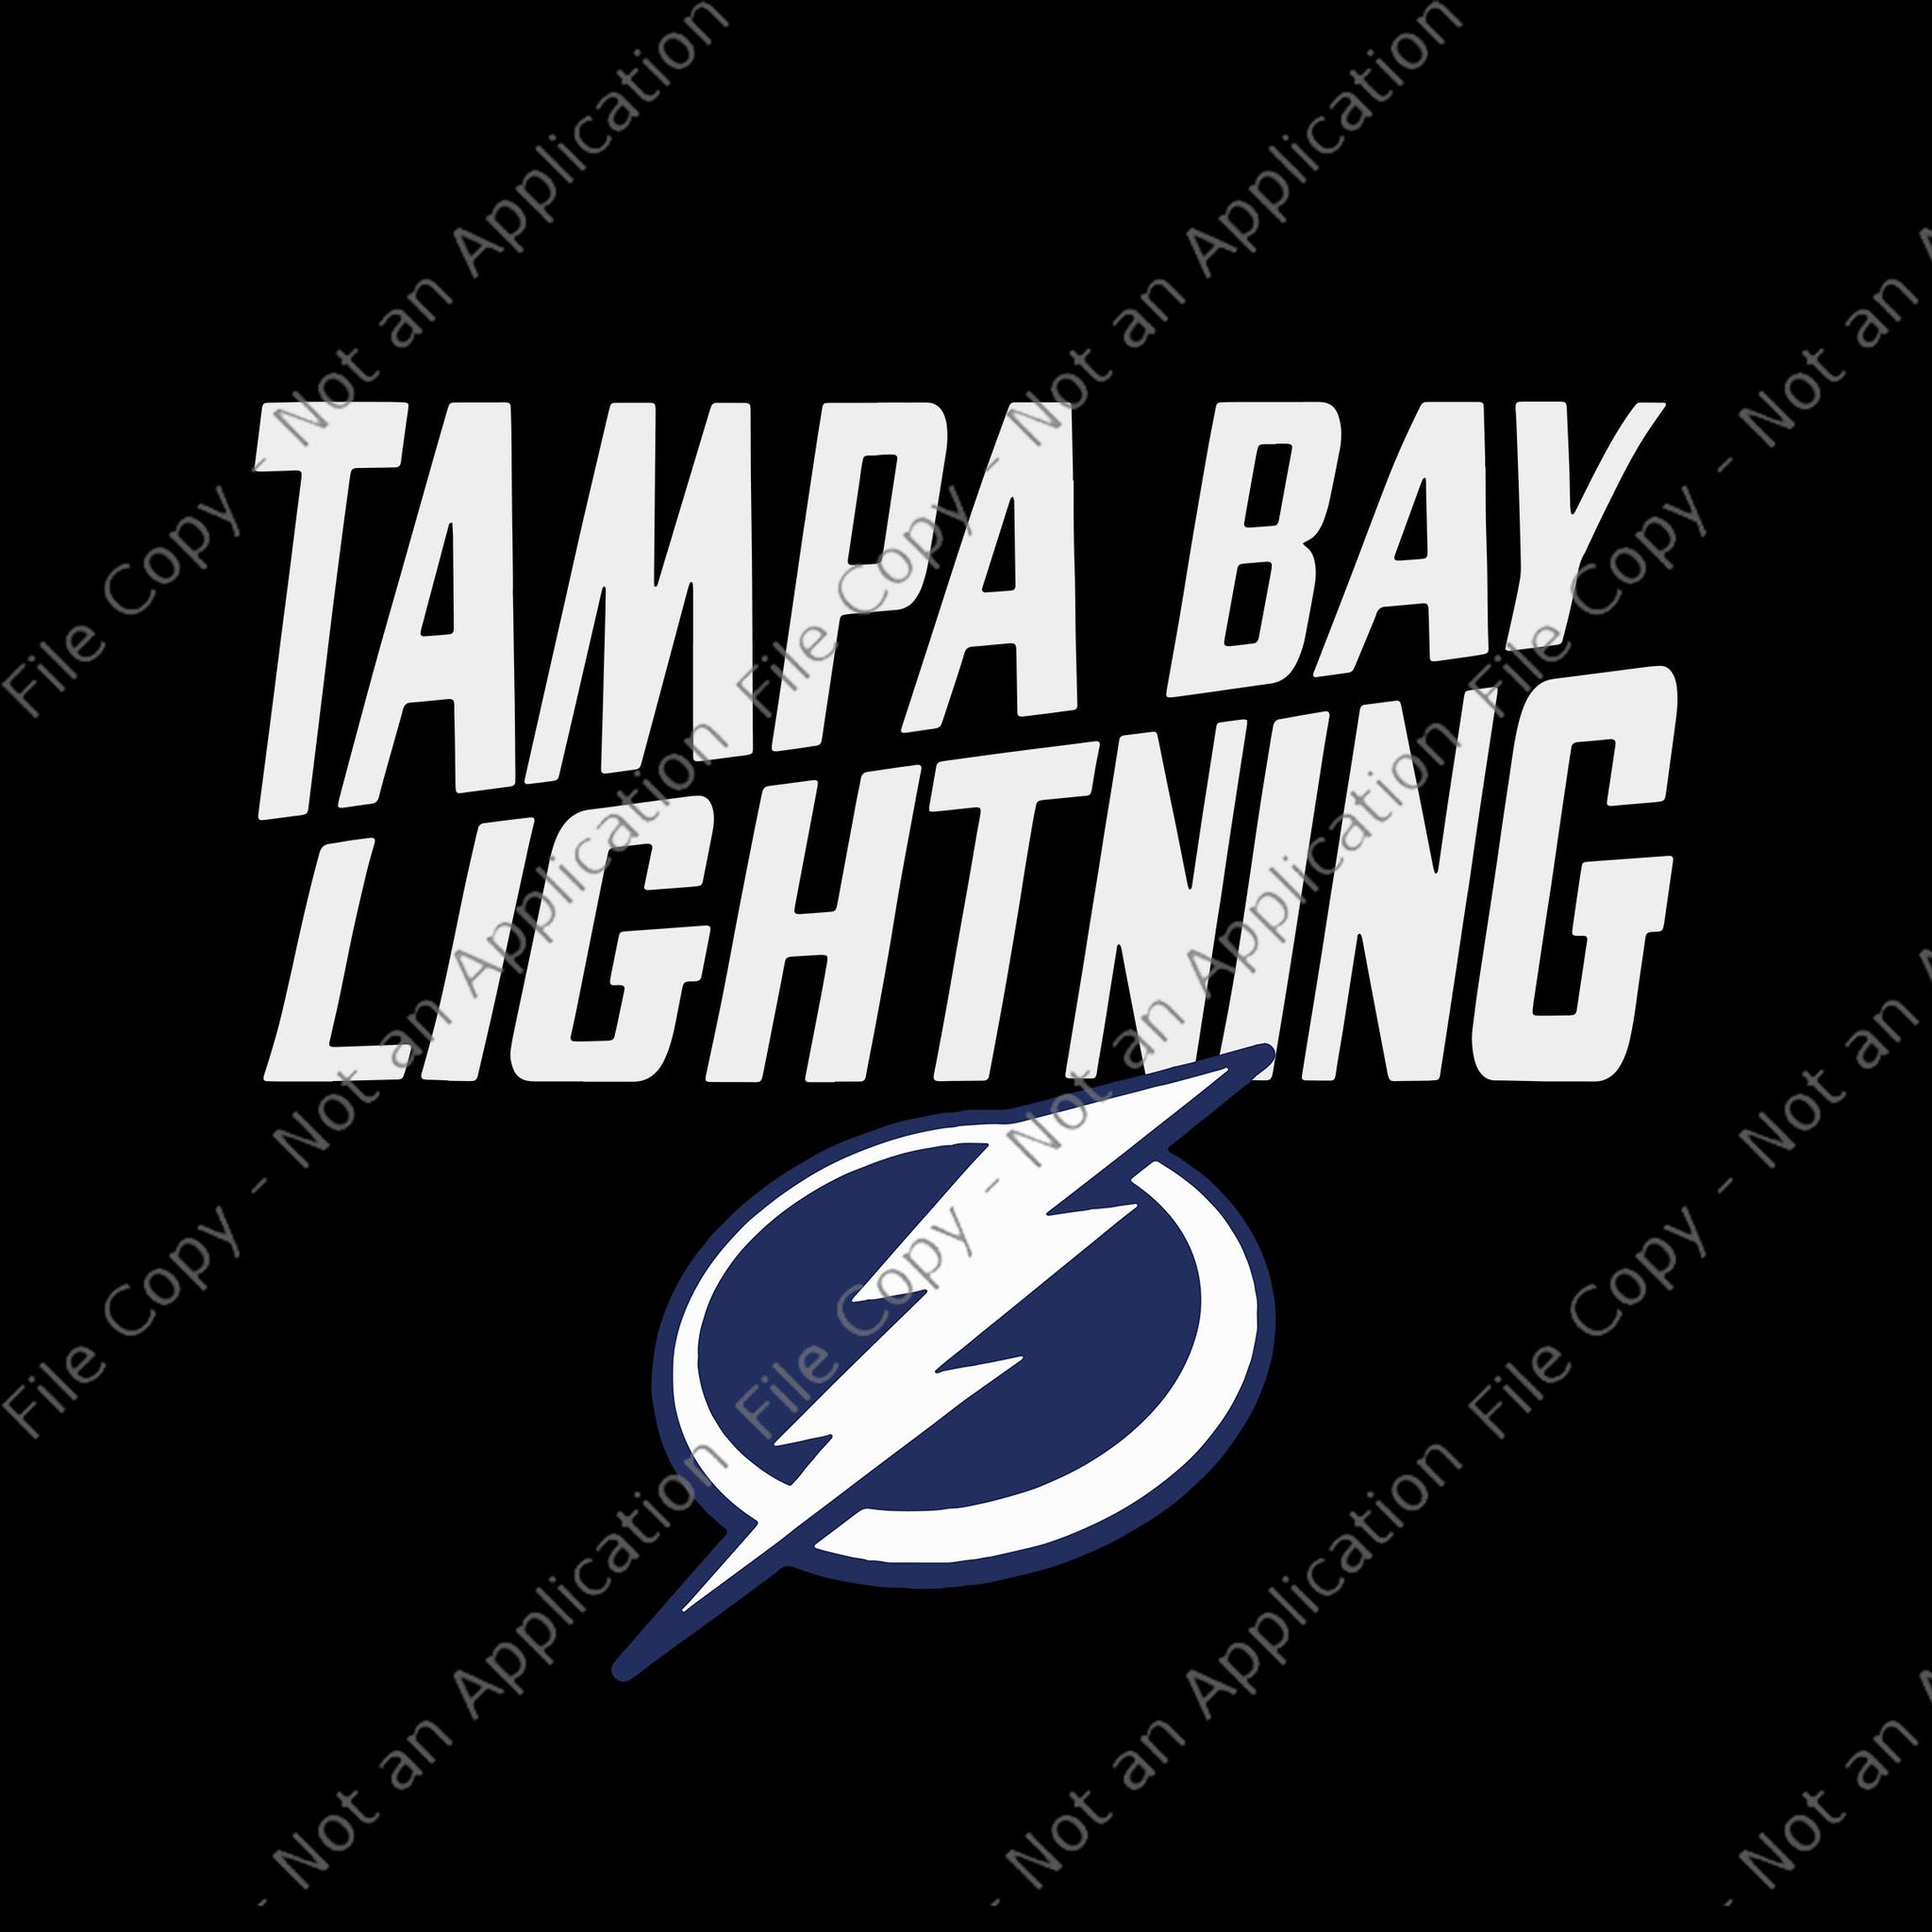 Tampa Bay Lighting Svg, Tampa Bay Lighting Hockey Team, Hockey Team, Hockey Logo, Hockey vector